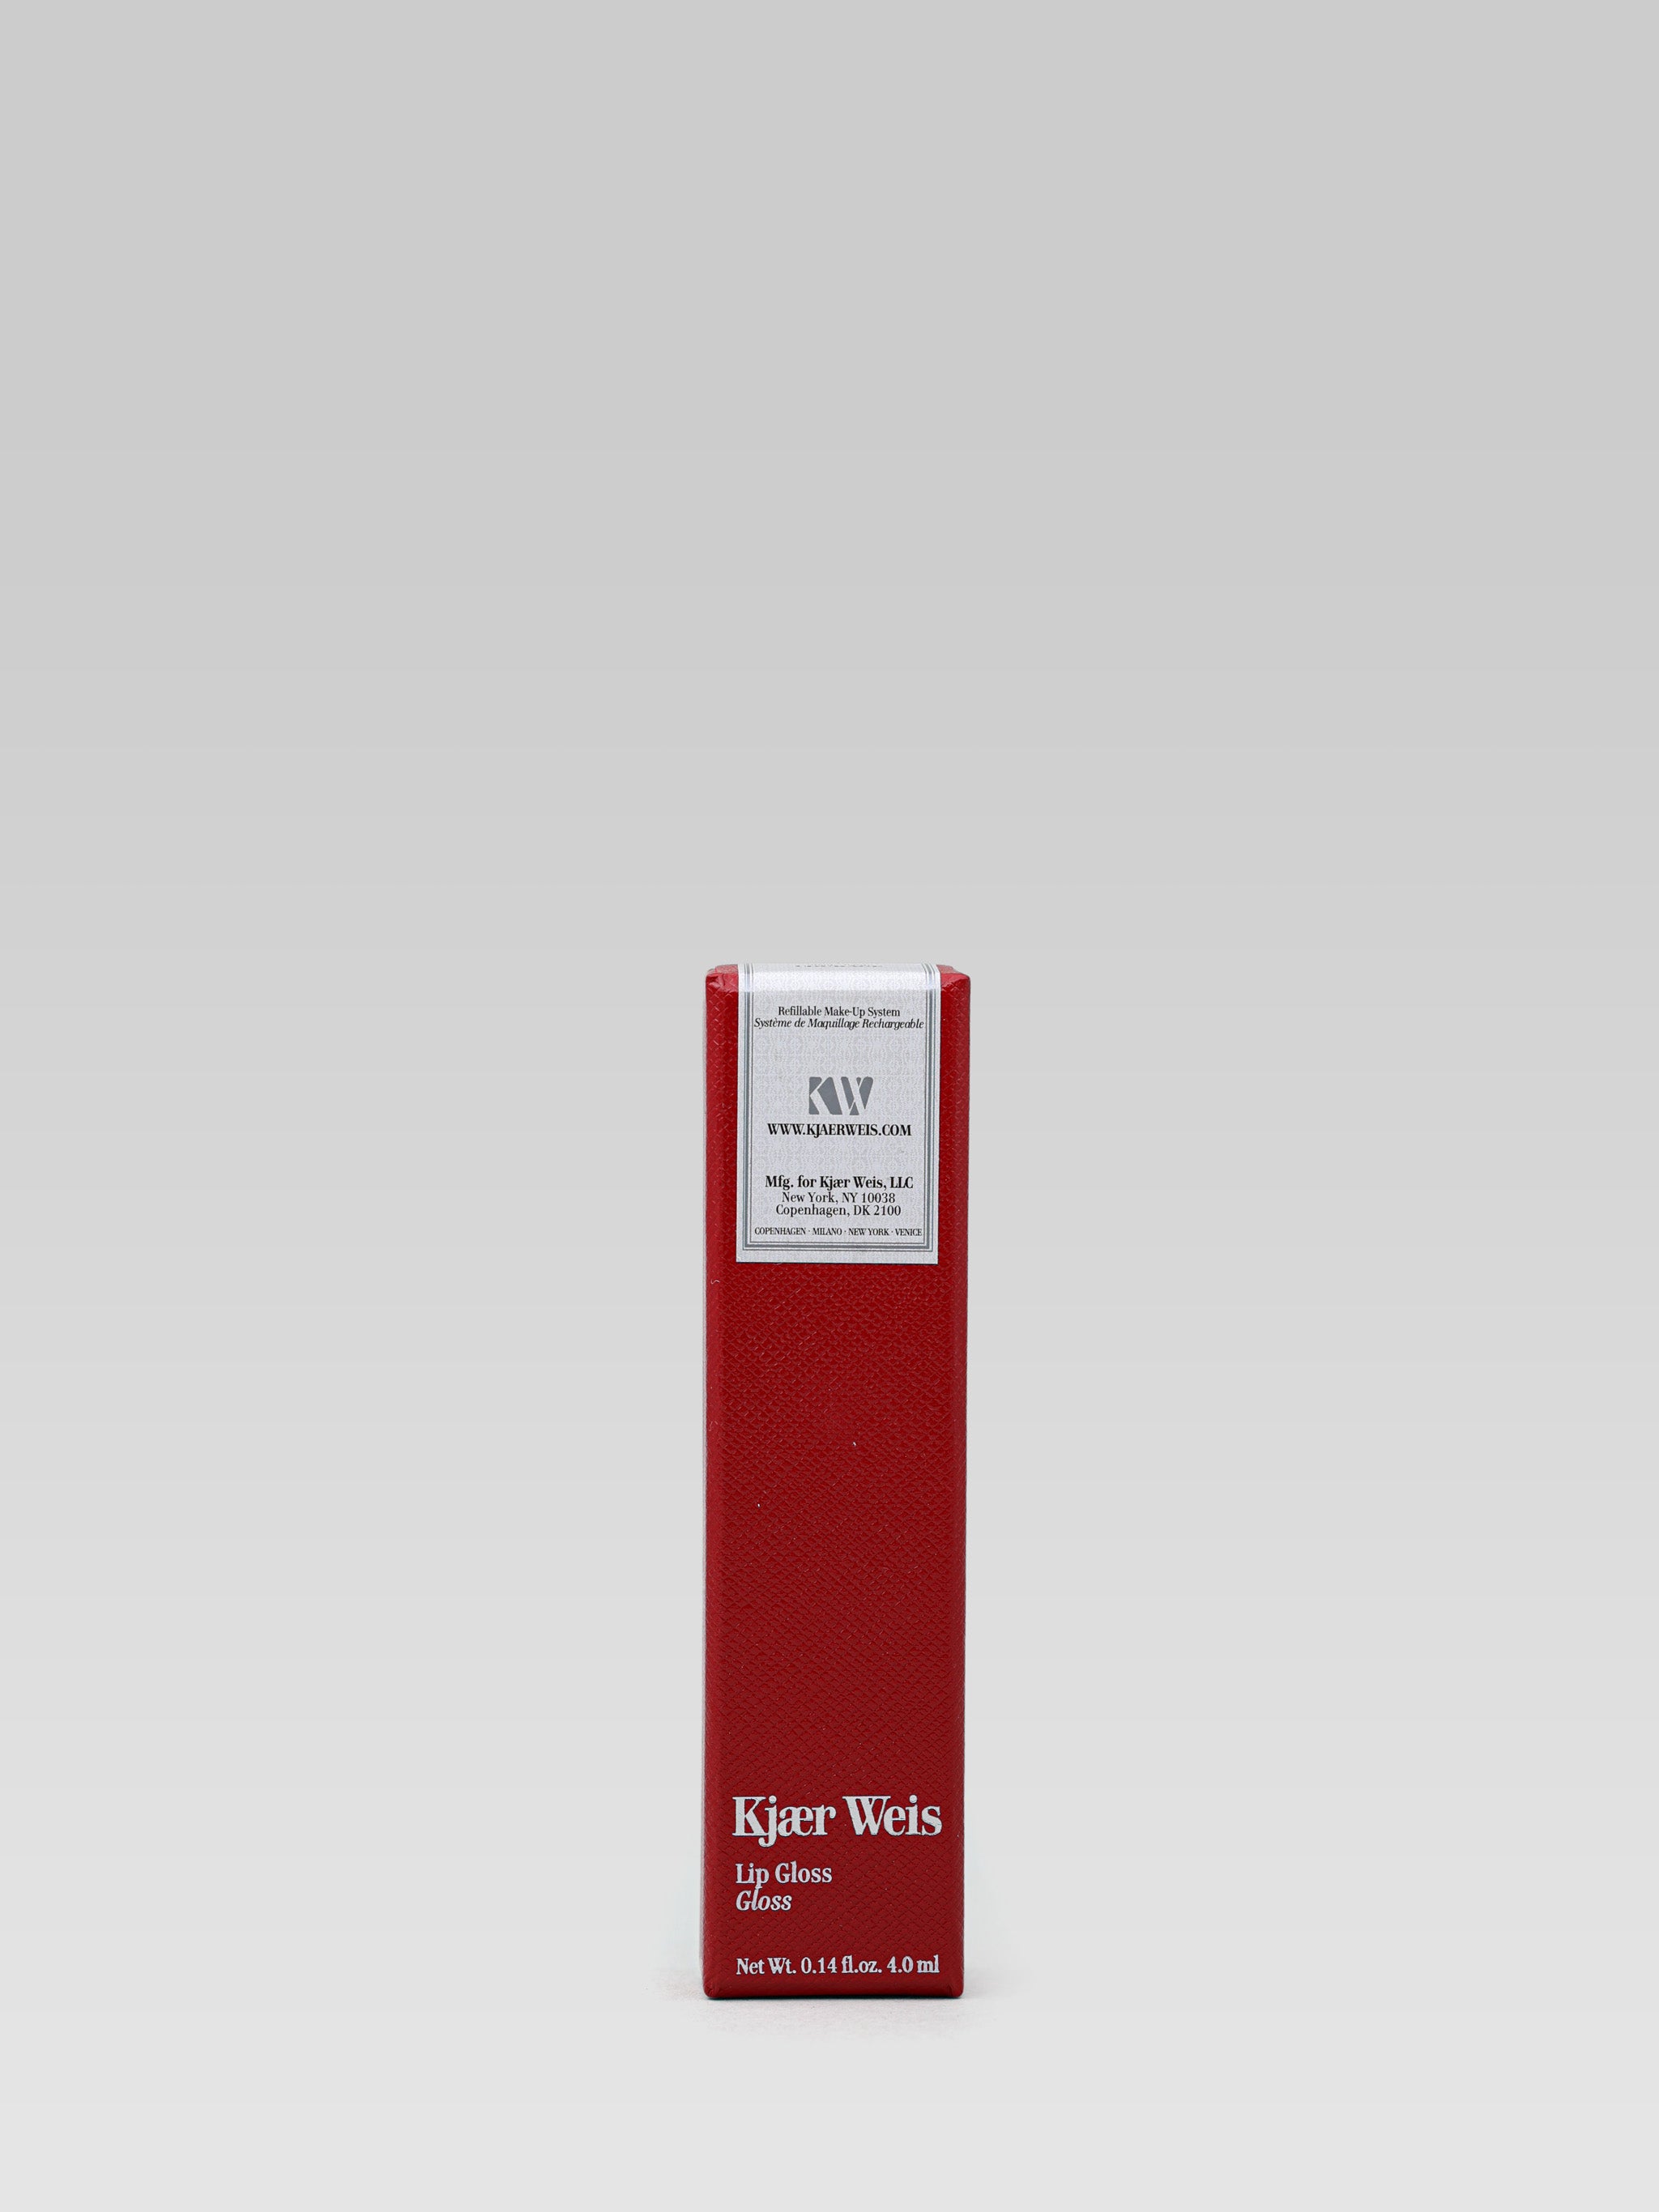 Kjaer Weis Lip Gloss product packaging 